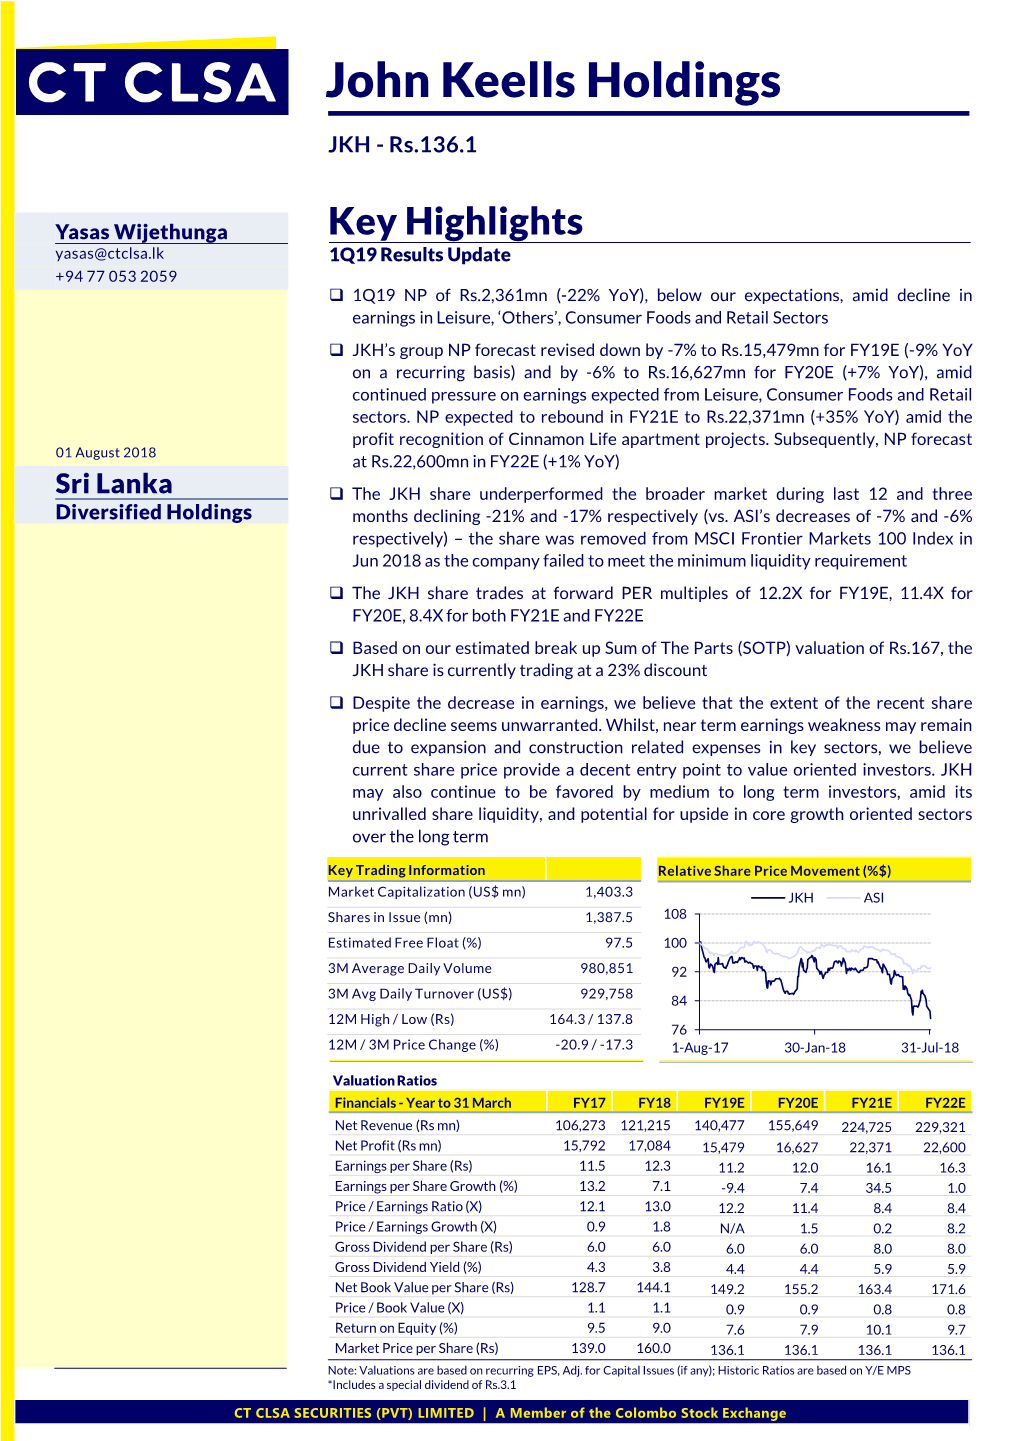 John Keells Holdings (JKH) 1Q19 Results Update